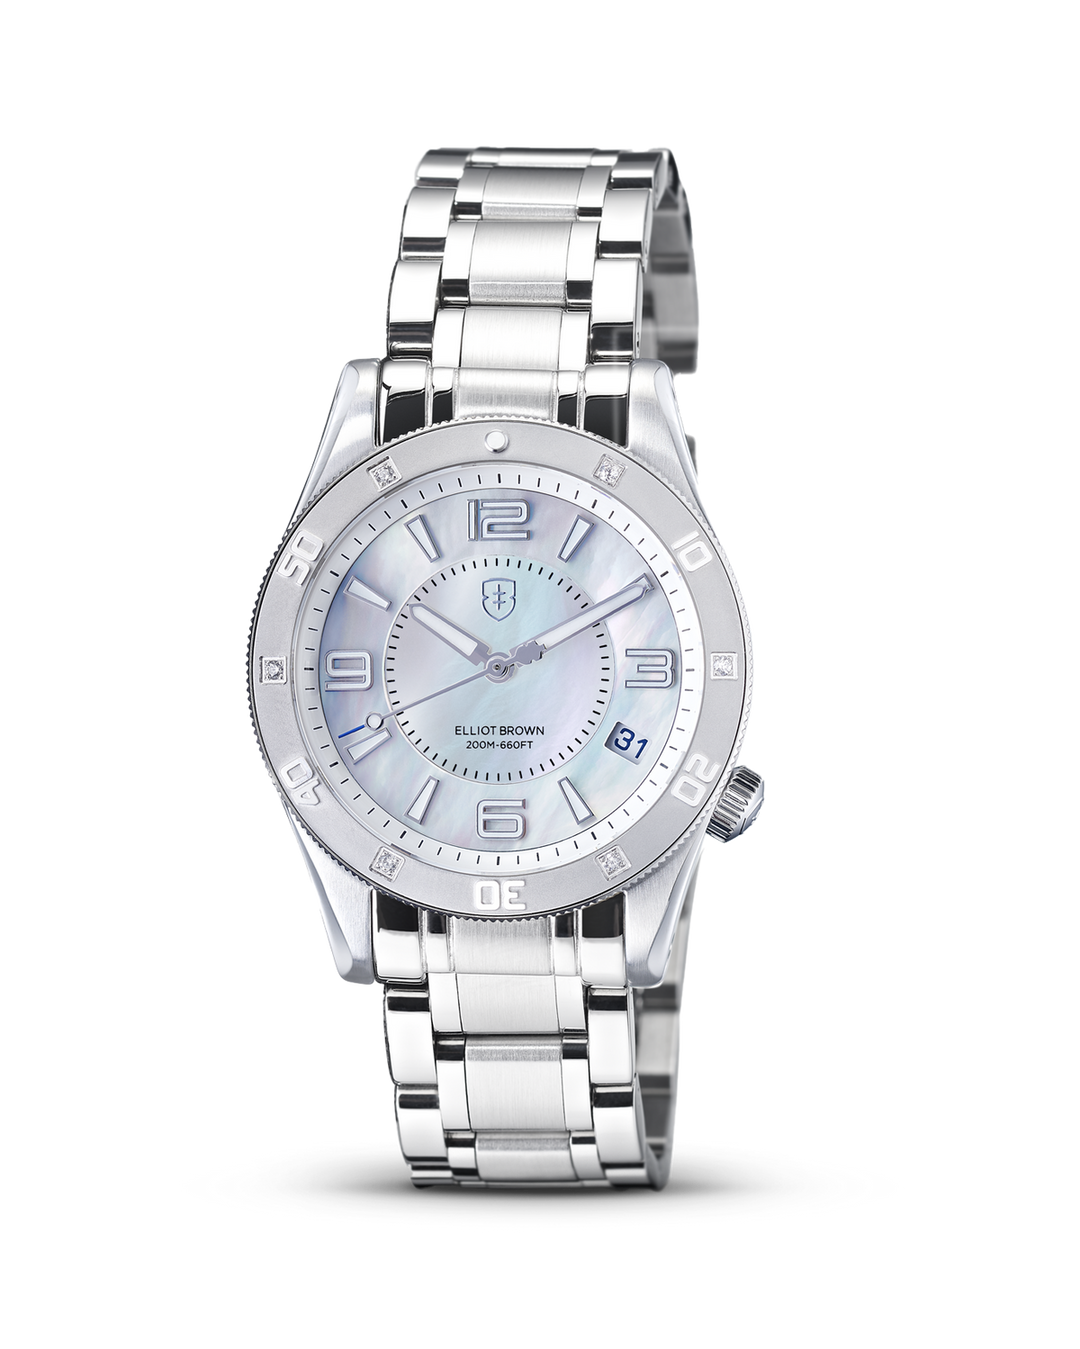 Ladys Elliot Brown Bloxworth Hali Quartz watch,  model number 929-203-B60